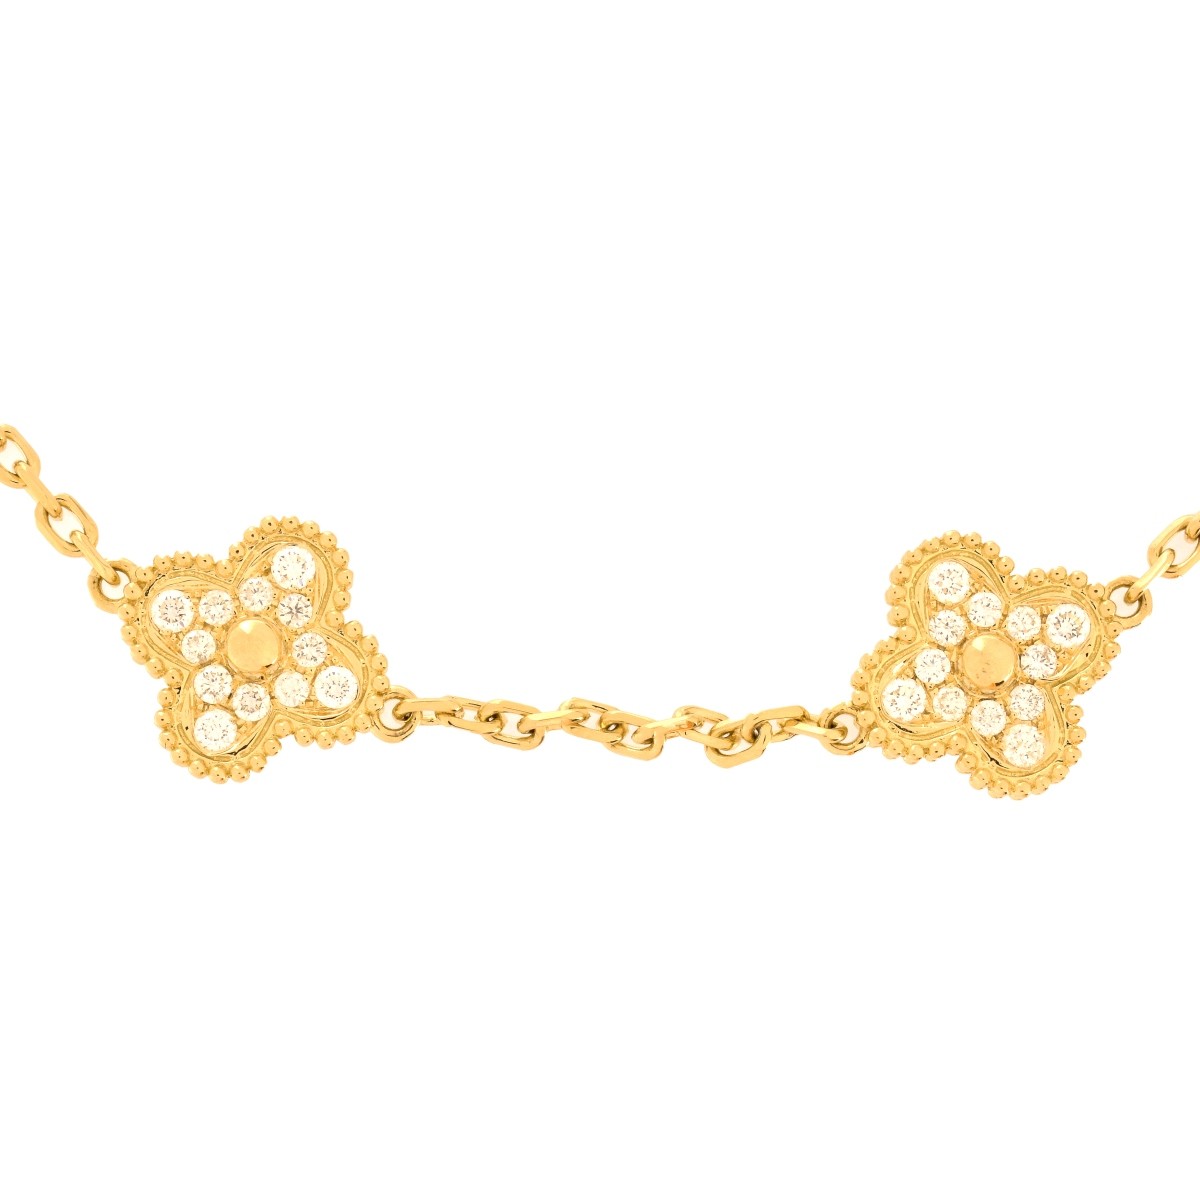 Van Cleef & Arpels Alhambra style Necklace